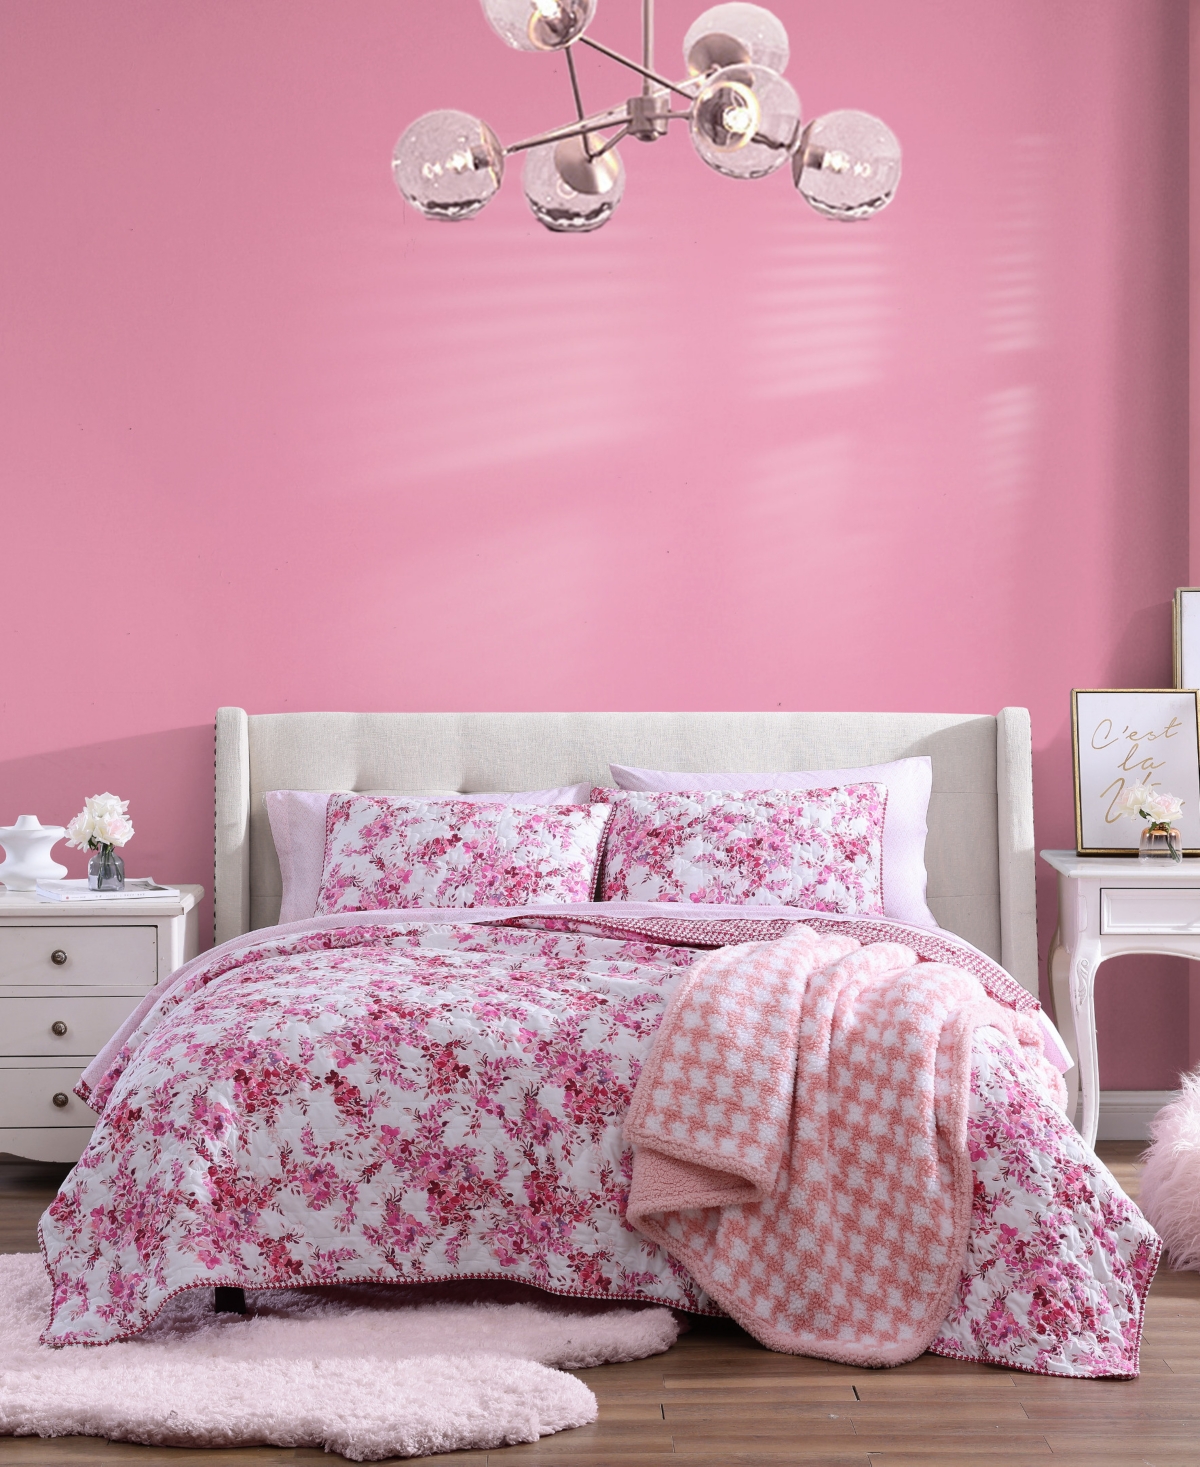 Betsey Johnson 3 Piece Floral Vineyard Quilt Set, Full/queen Bedding In Berry Pink